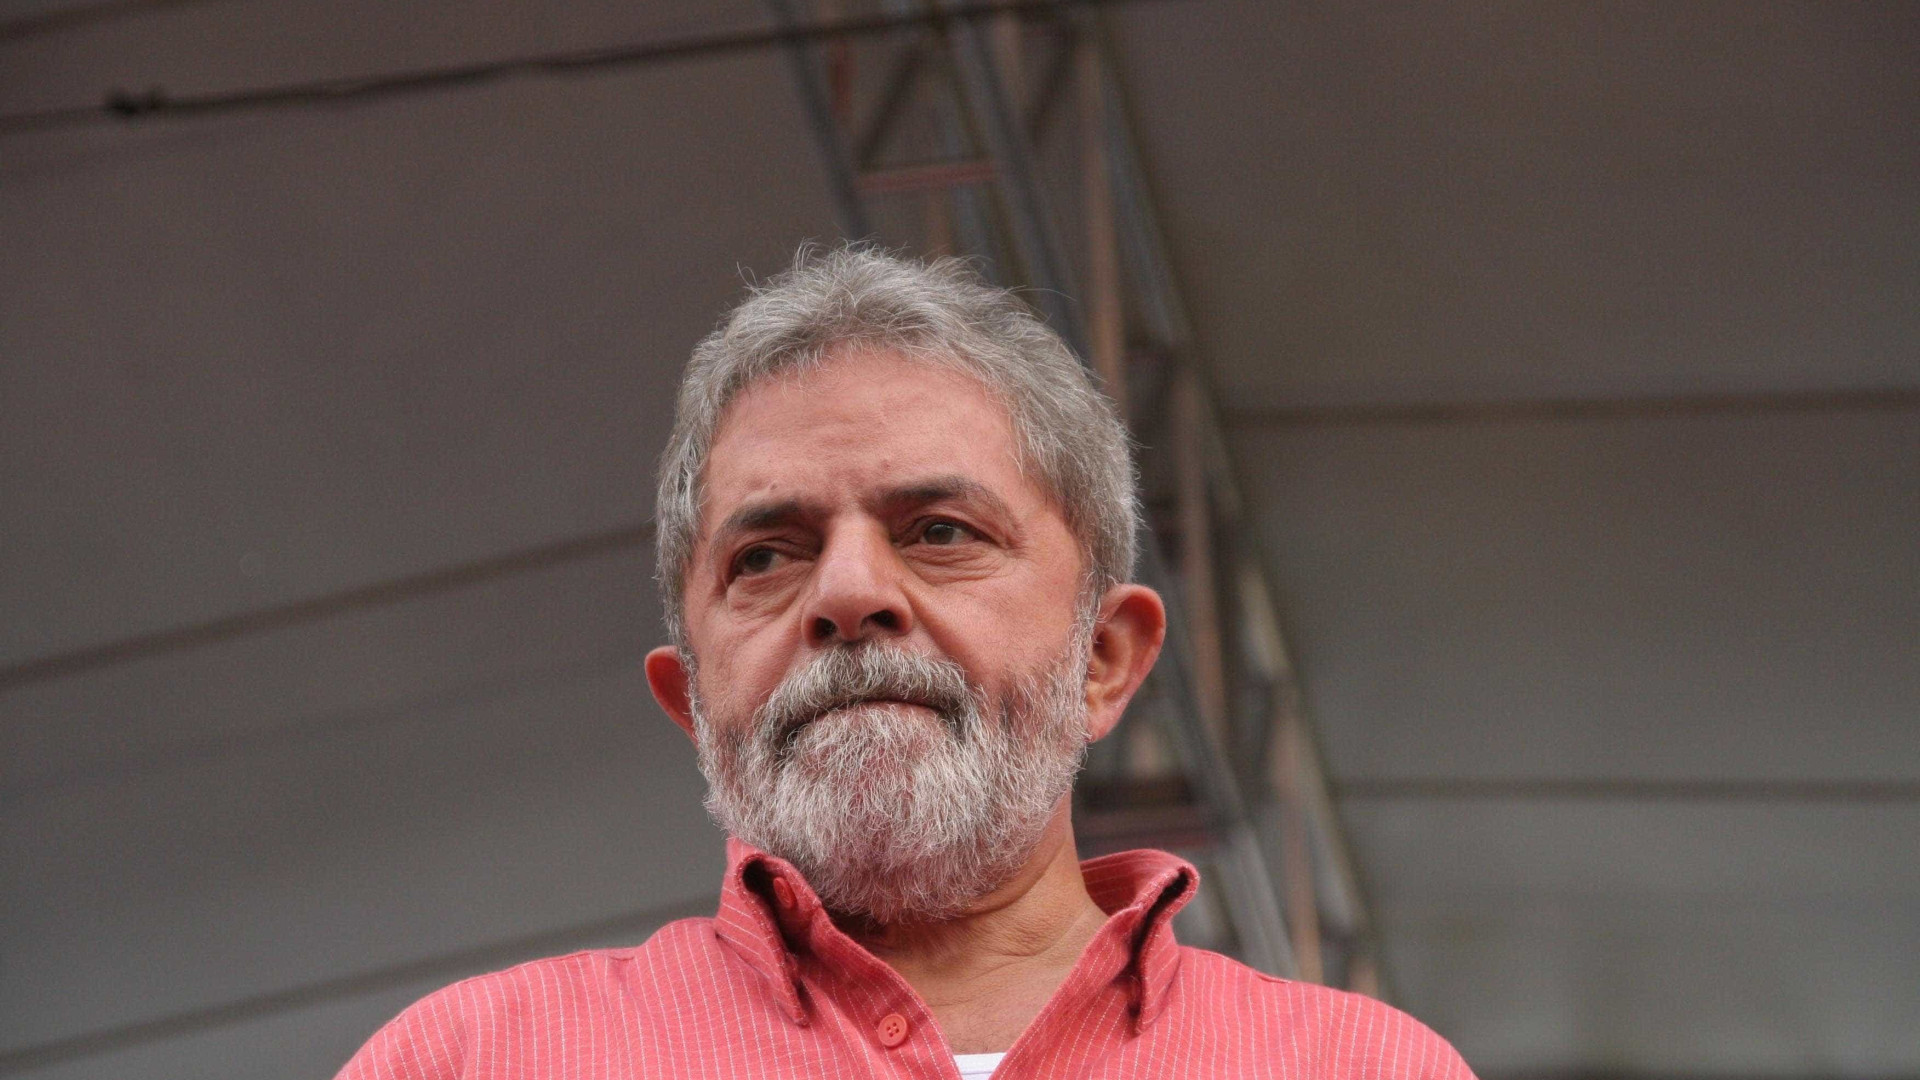 Aliados de Lula: juíza está 'em marcha acelerada' para condená-lo